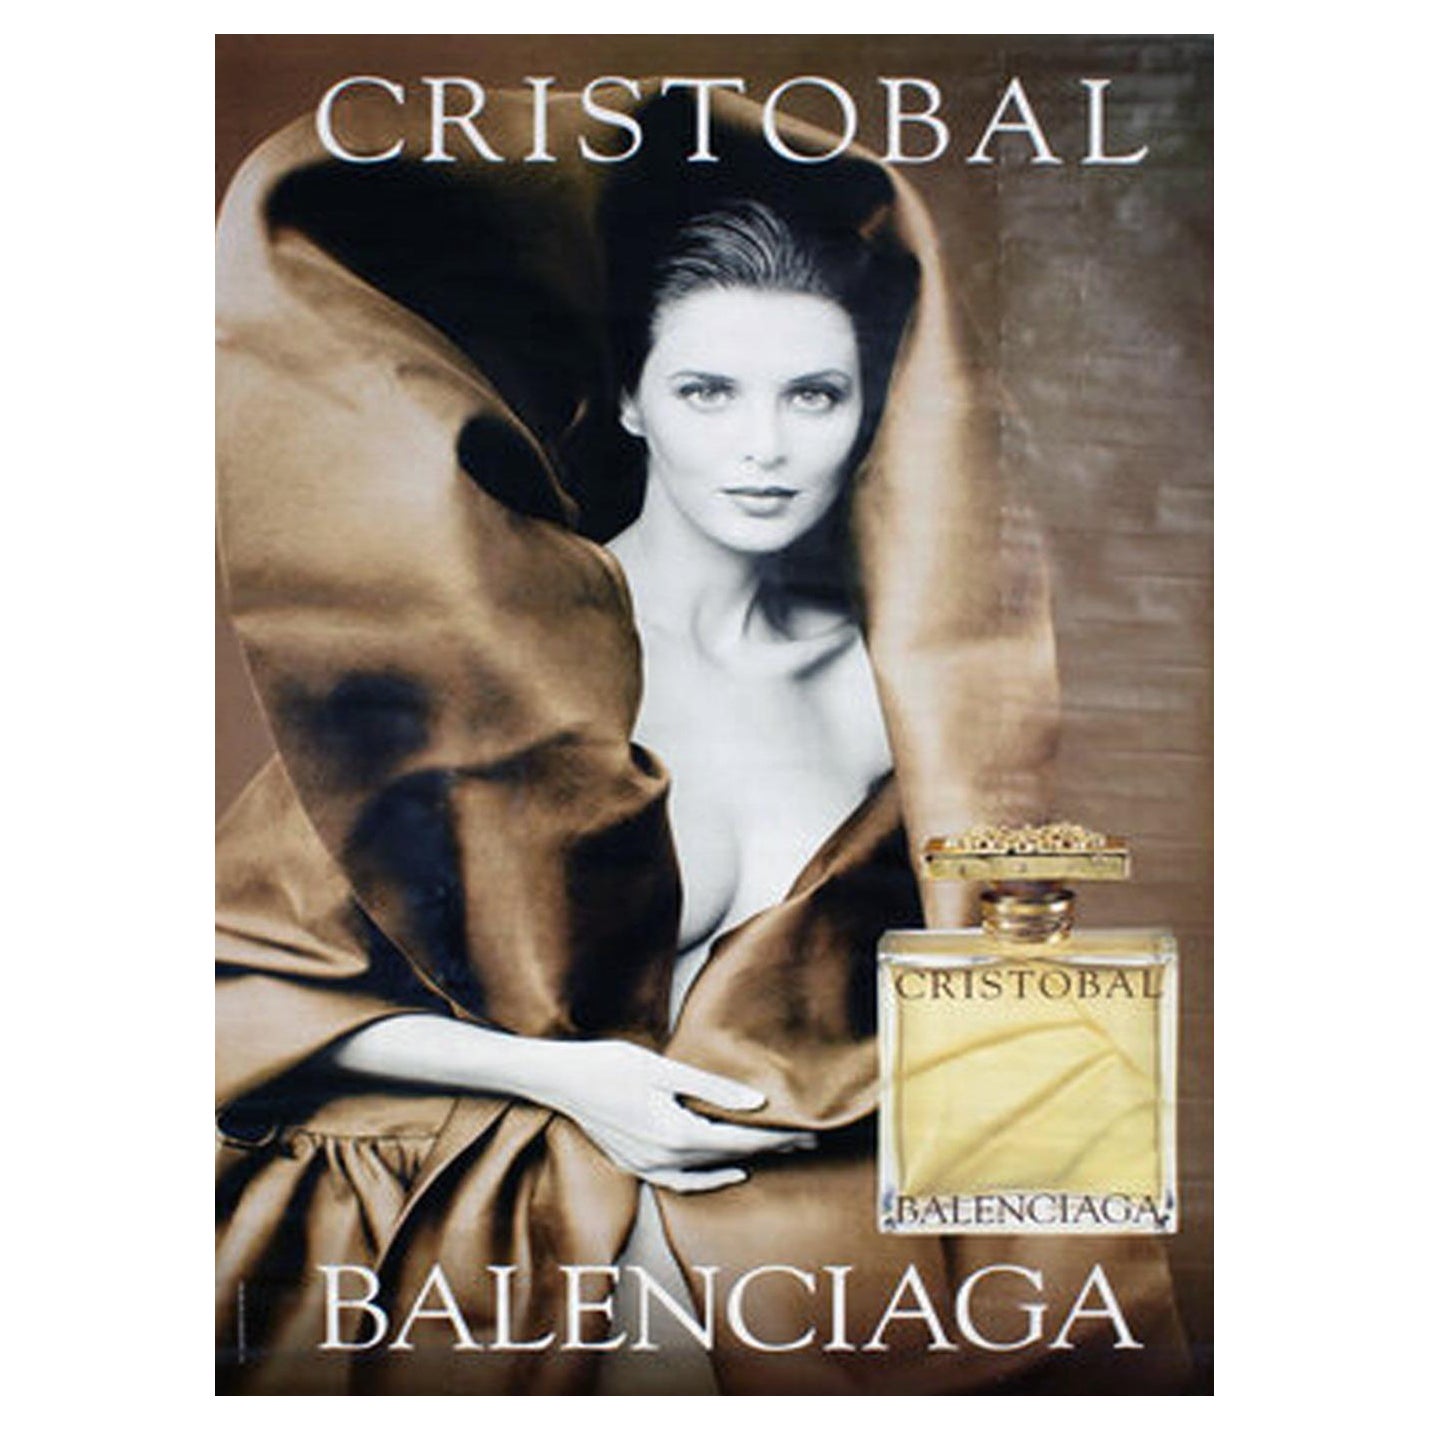 1999 Balenciaga - Cristobal Original Vintage Poster For Sale